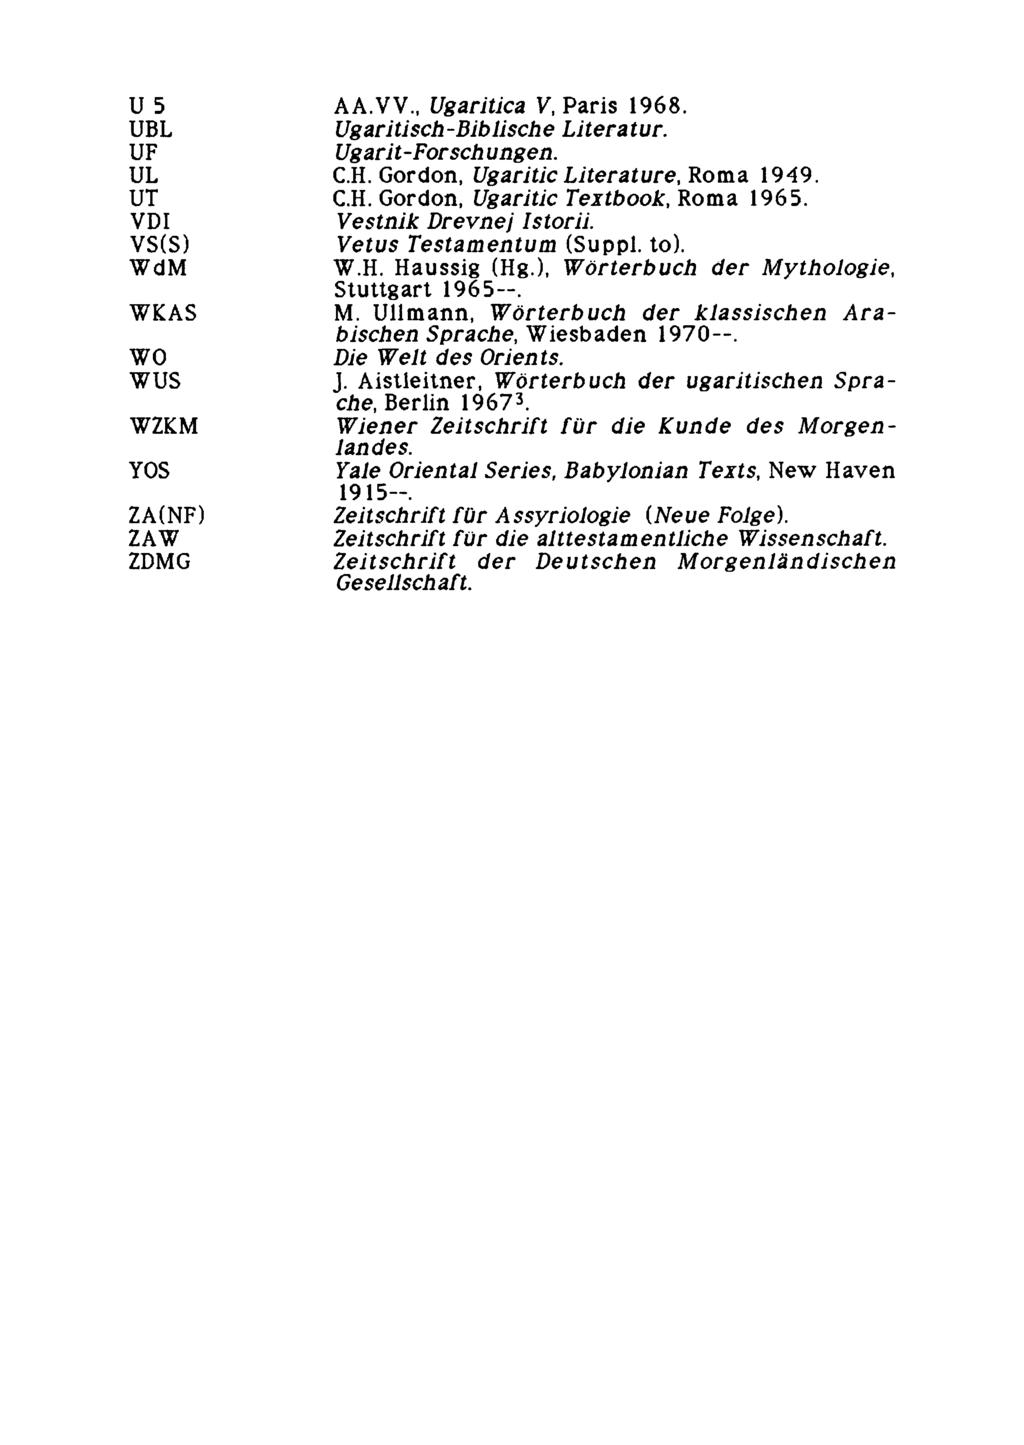 U 5 AA.VV., Ugaritica V, Paris 1968. UBL Ugaritisch-Biblische Literatur. UF Ugarit-Forschungen. UL C.H. Gordon, Ugaritic Literature, Roma 1949. UT C.H. Gordon, Ugaritic Textbook, Roma 1965.